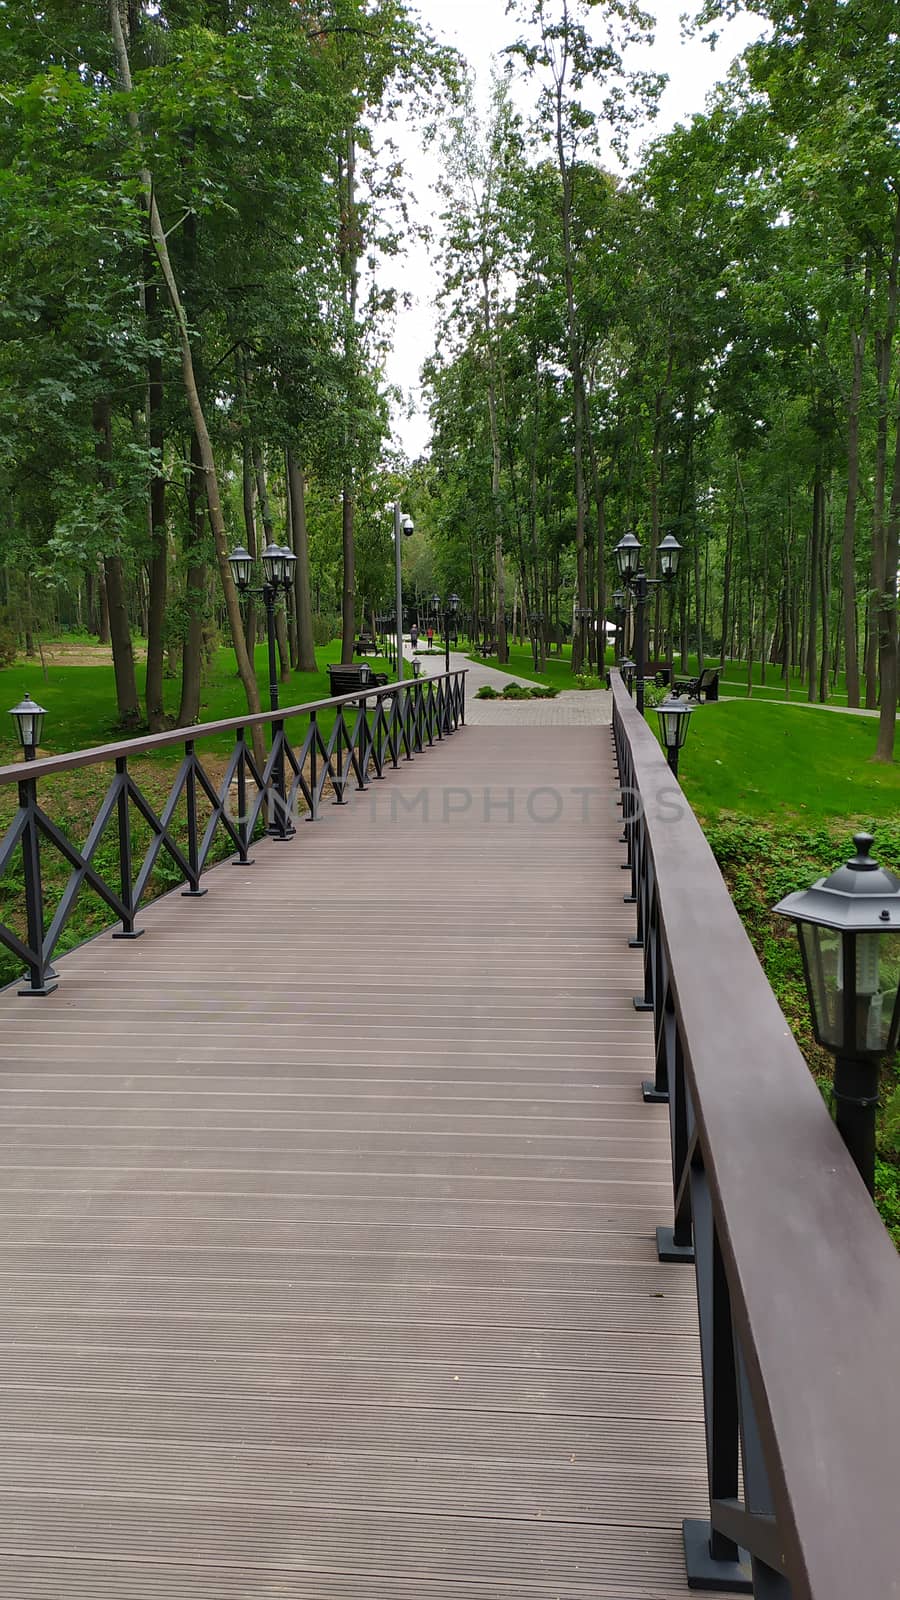 Wooden bridge in beautiful green forest